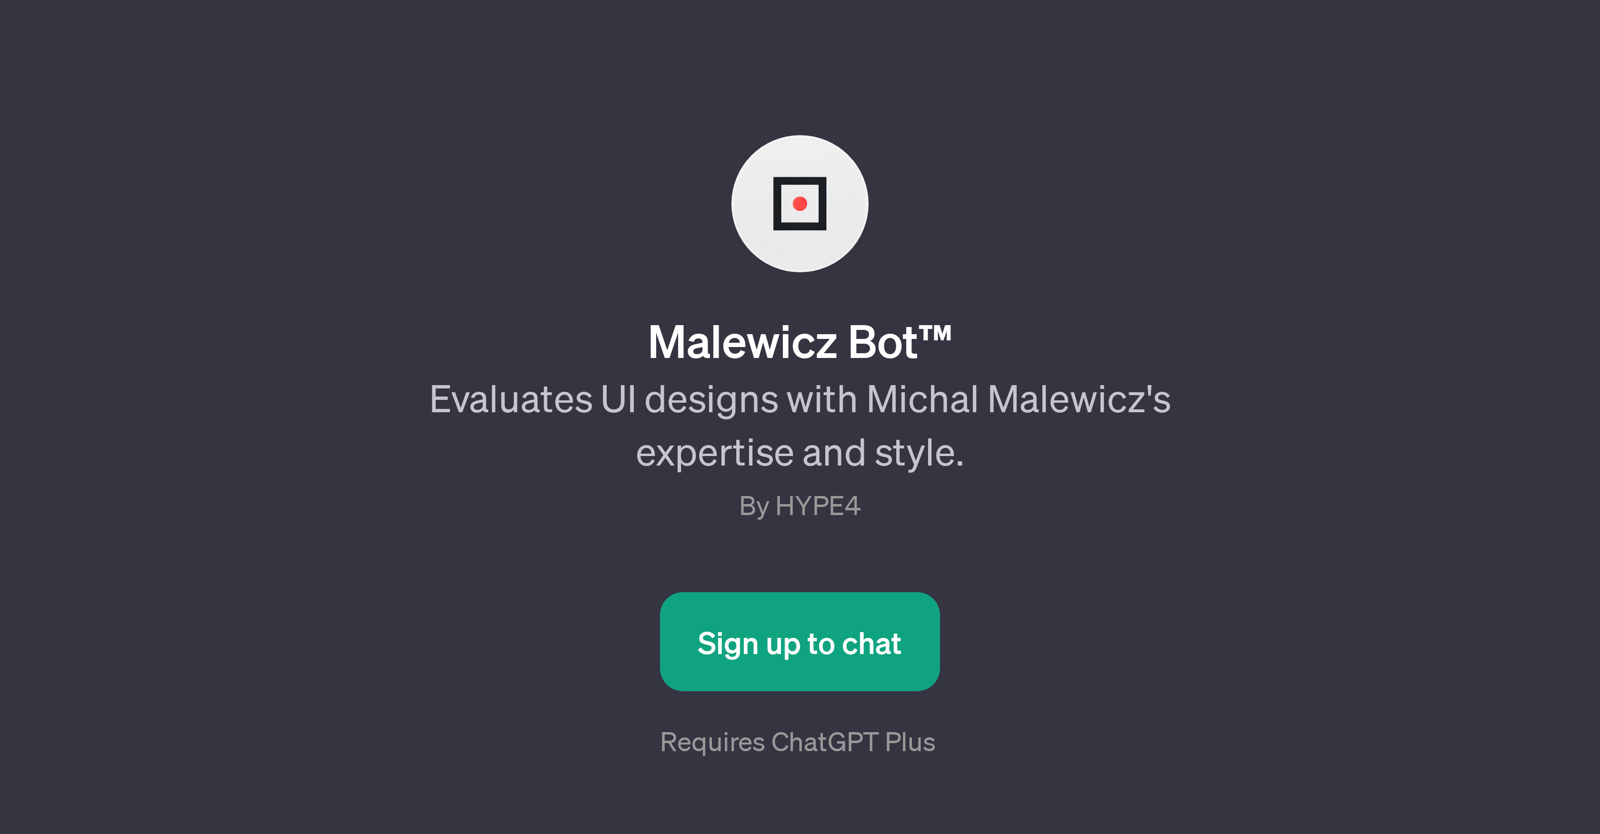 Malewicz Bot website